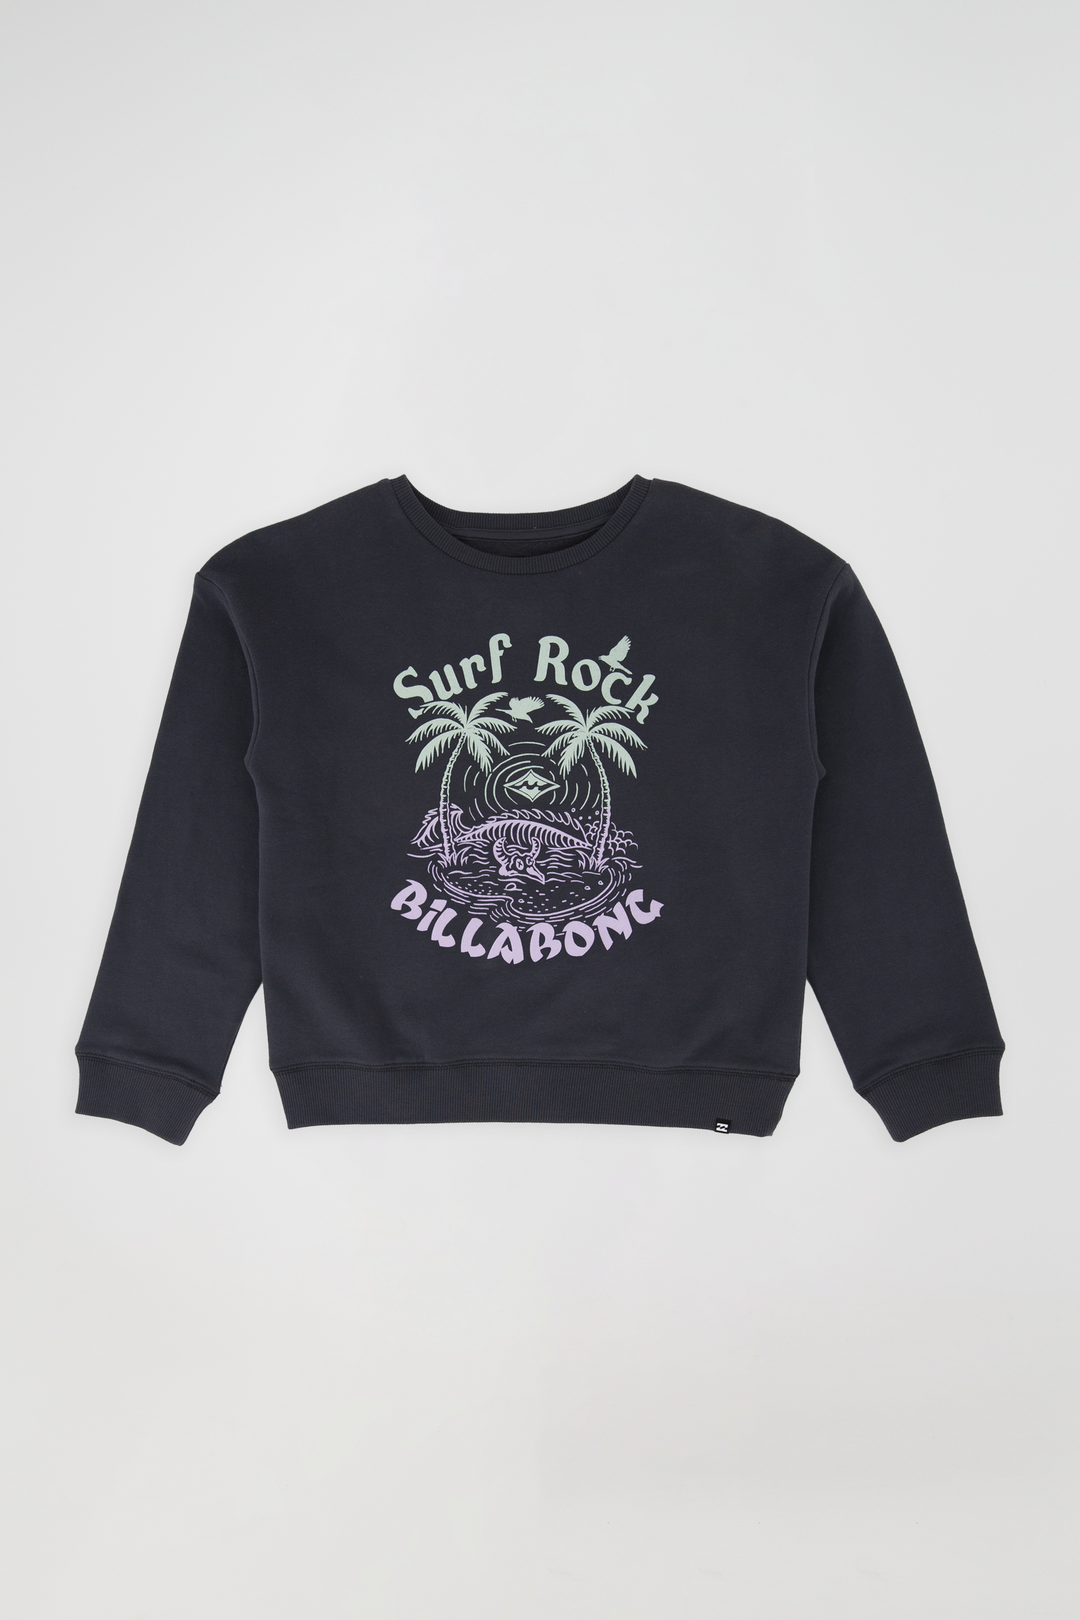 Billabong Surf Rock Crewneck Sweatshirt